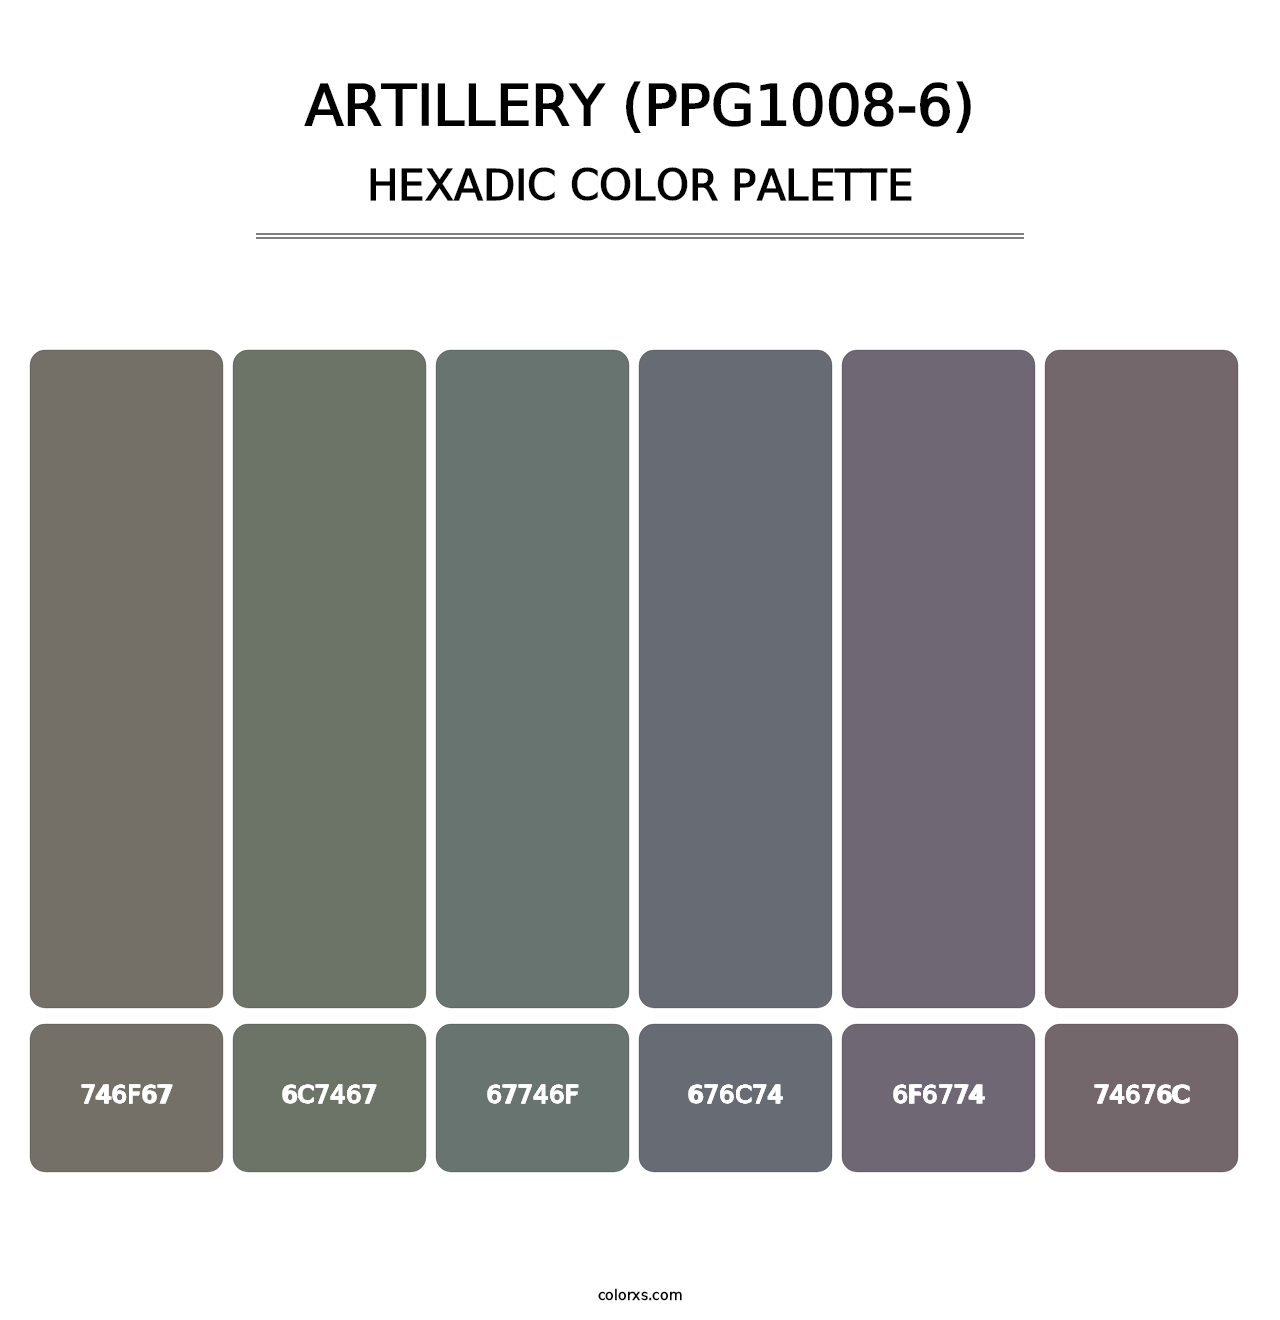 Artillery (PPG1008-6) - Hexadic Color Palette